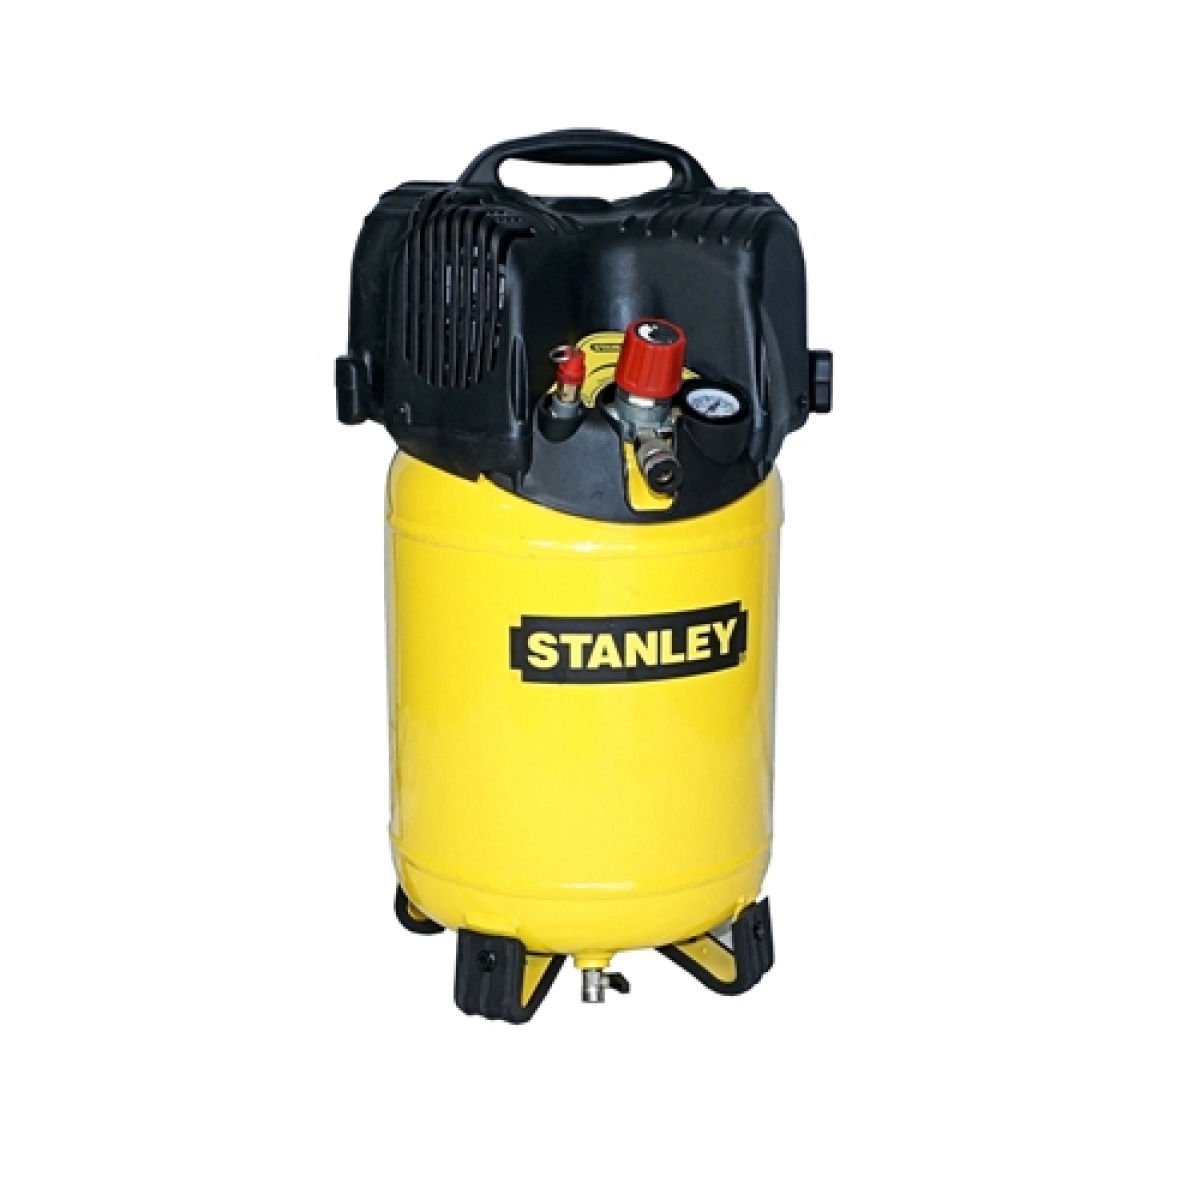 Kompressor Stanley 200-10-24 V - TWENTY / B-Ware